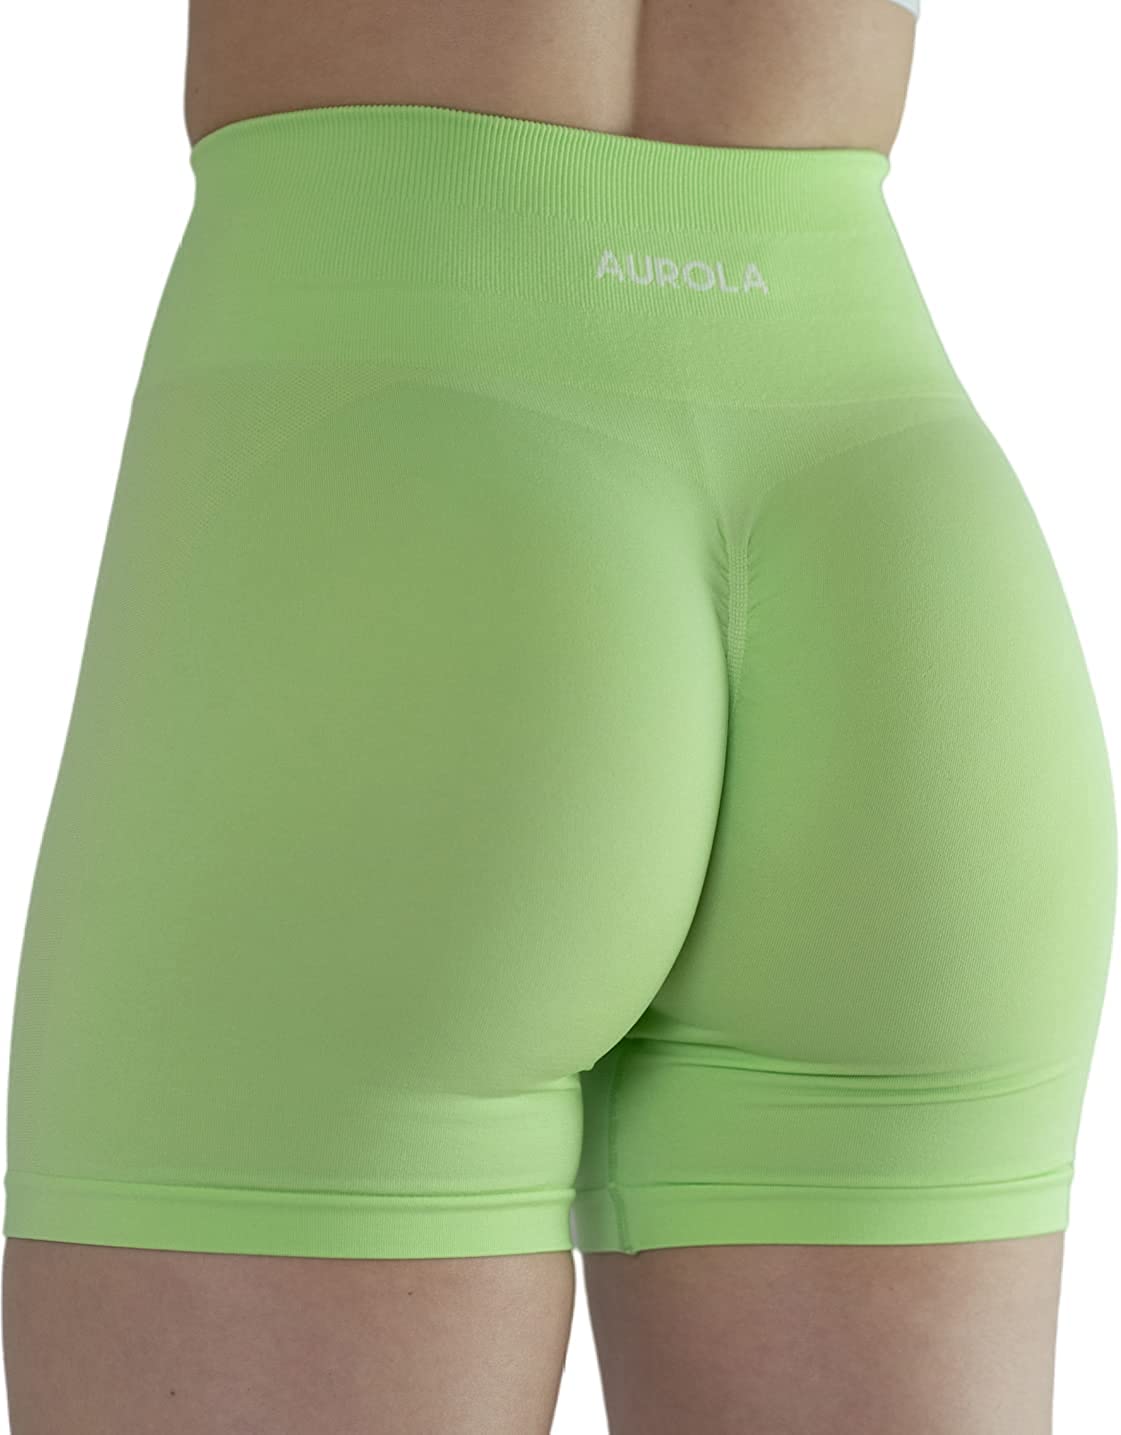 AUROLA Intensify Workout Shorts for Women Seamless Scrunch Large, Carob  Brown